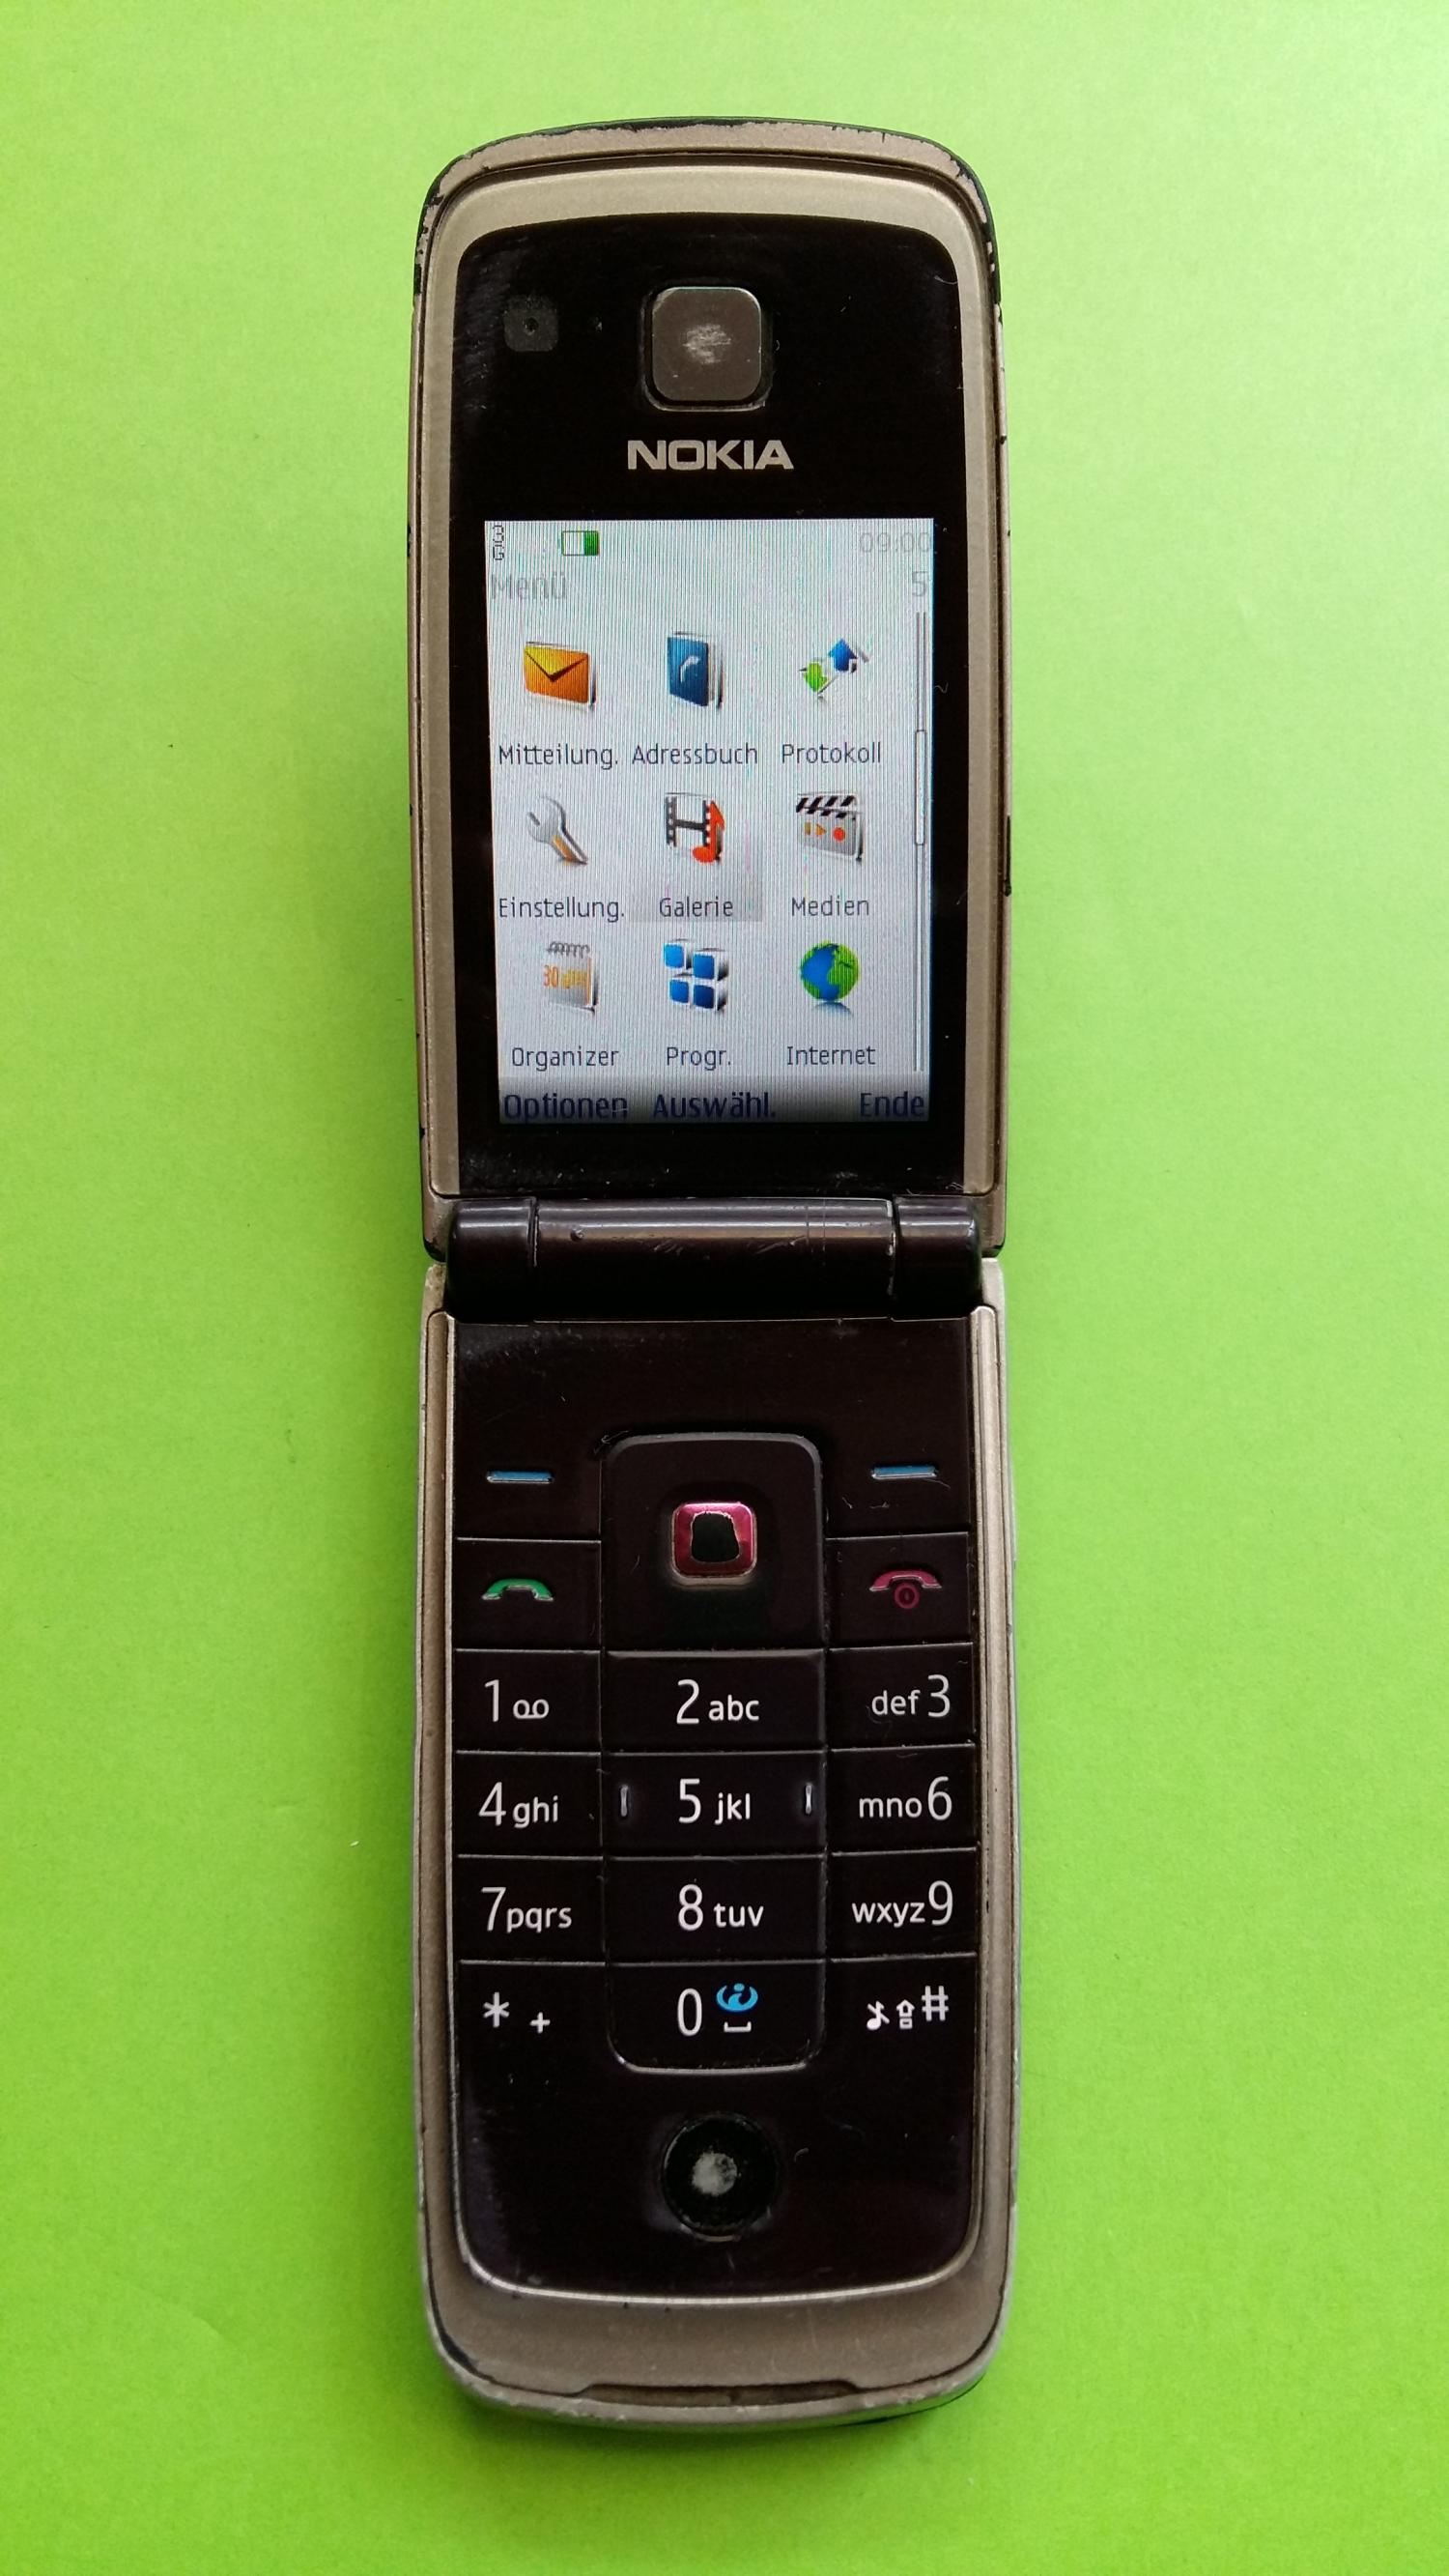 image-7331858-Nokia 6600F-1 Fold (1)2.jpg